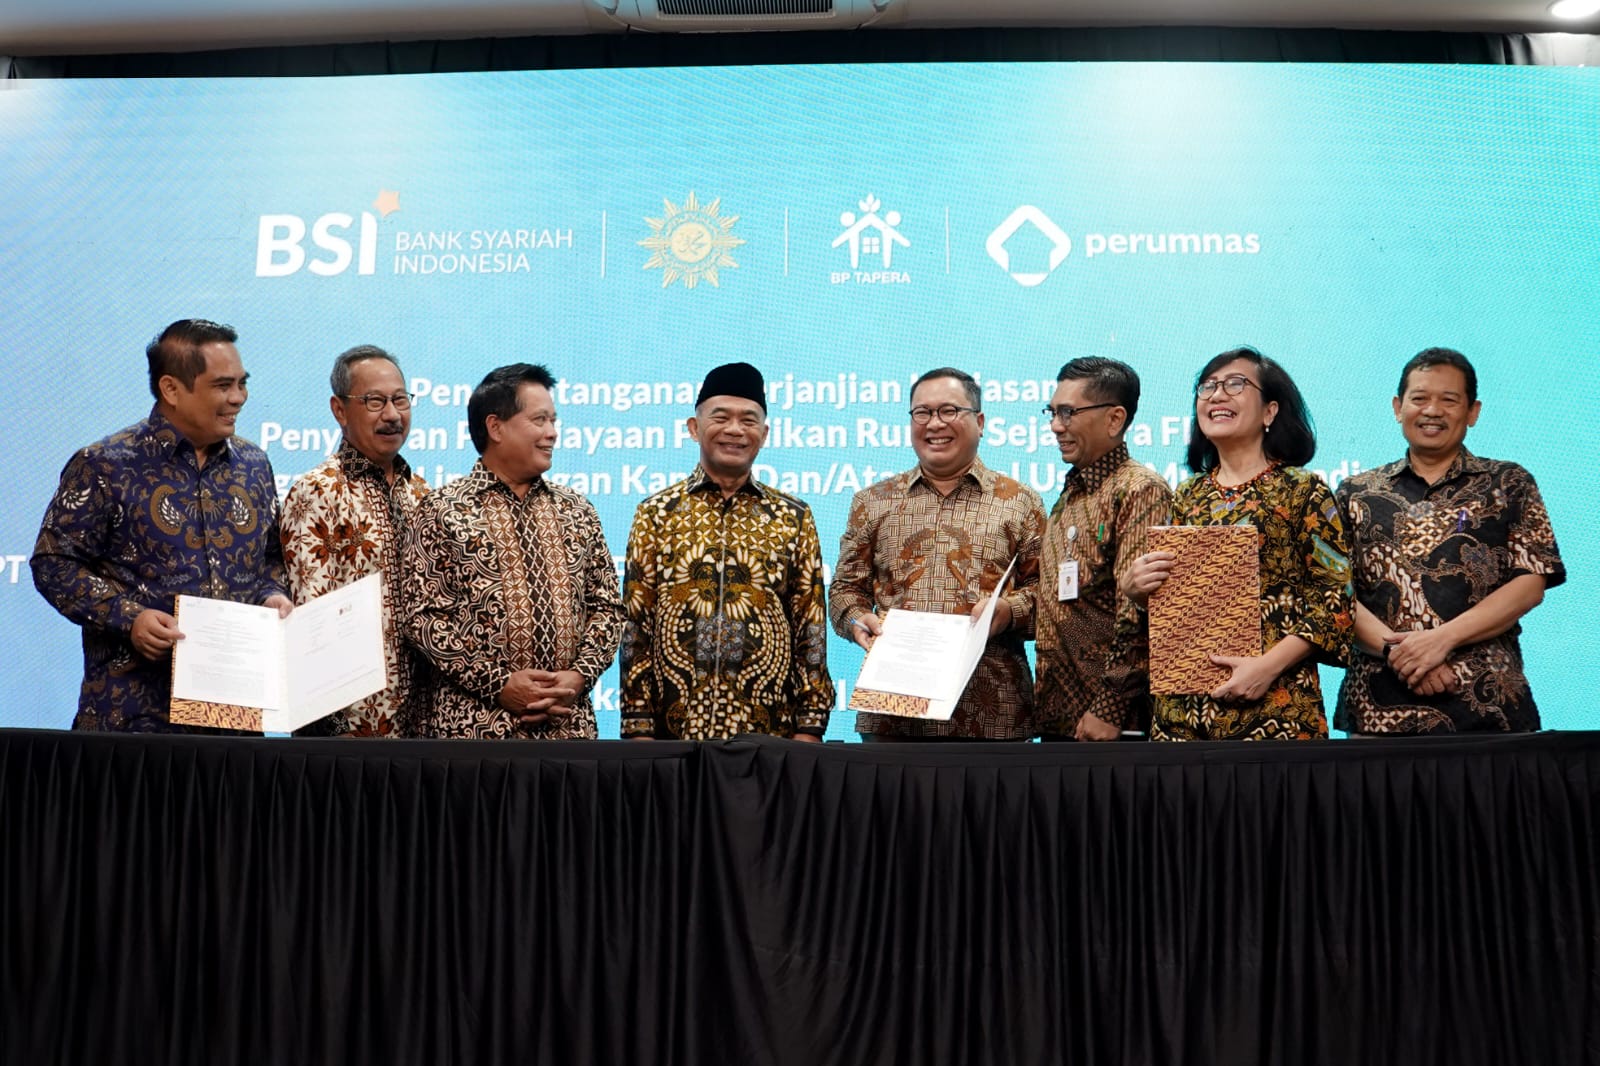 BSI, PP Muhammadiyah, BP Tapera dan Perumnas Berkolaborasi, Maksimalkan Penyaluran KPR Syariah